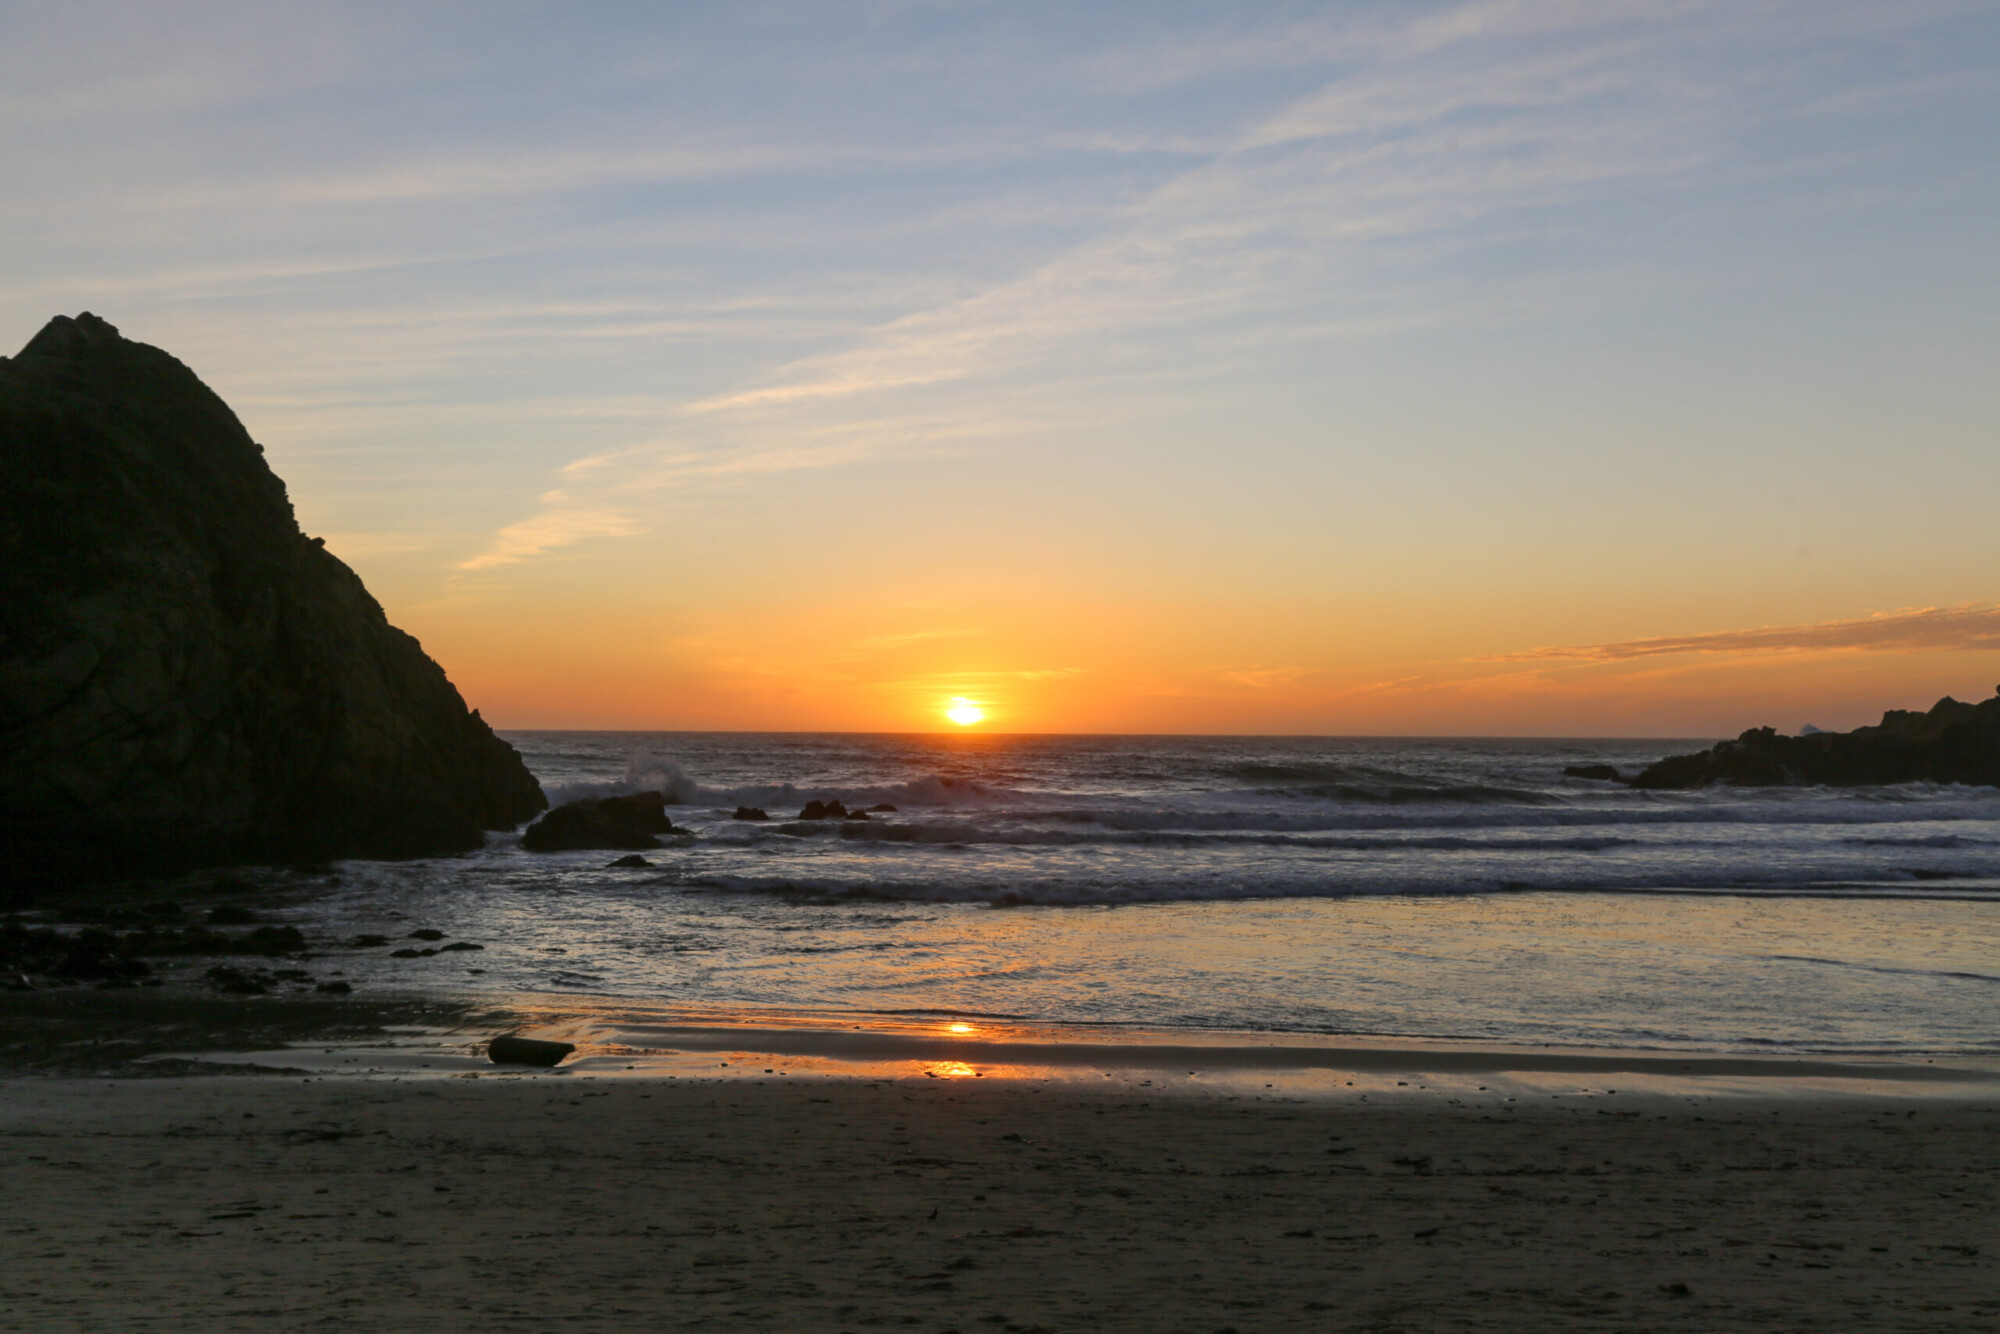 Sunset view of Pfeiffer Beach in Big Sur, California